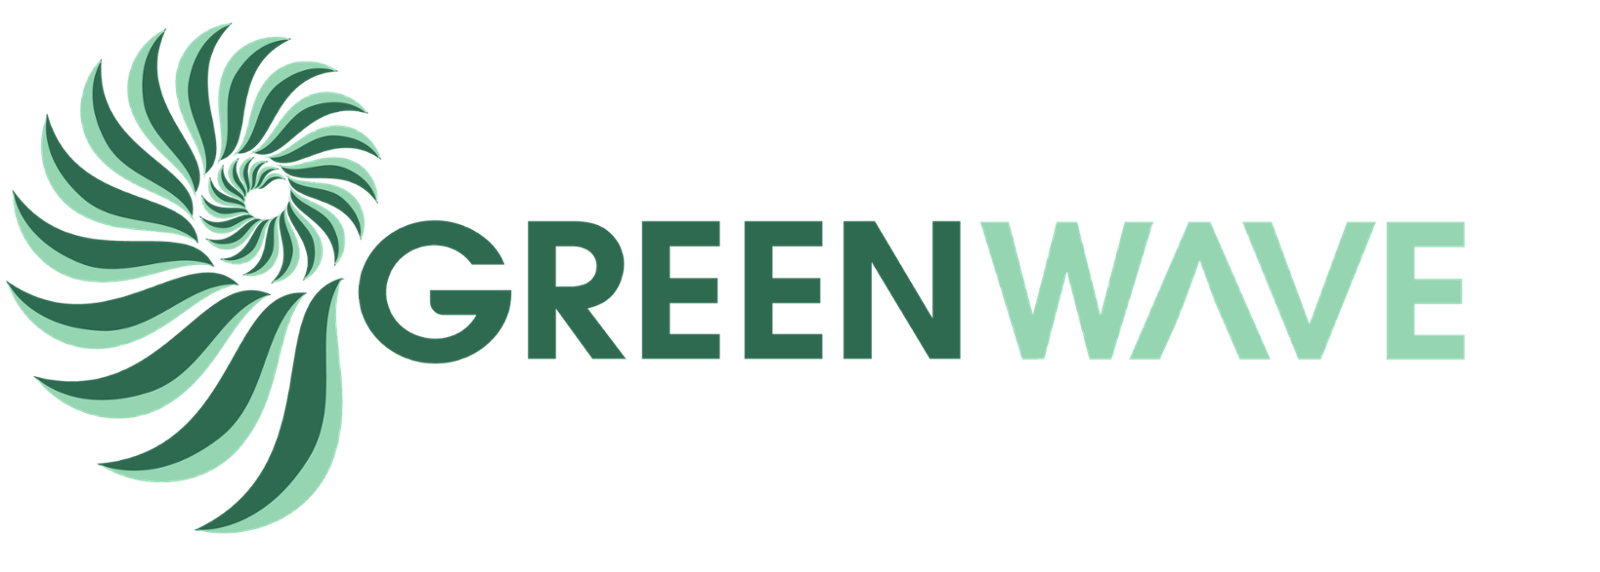 NTLhWNuCKxEb8HcX-GW-Final-Logos_Green-Greenwave